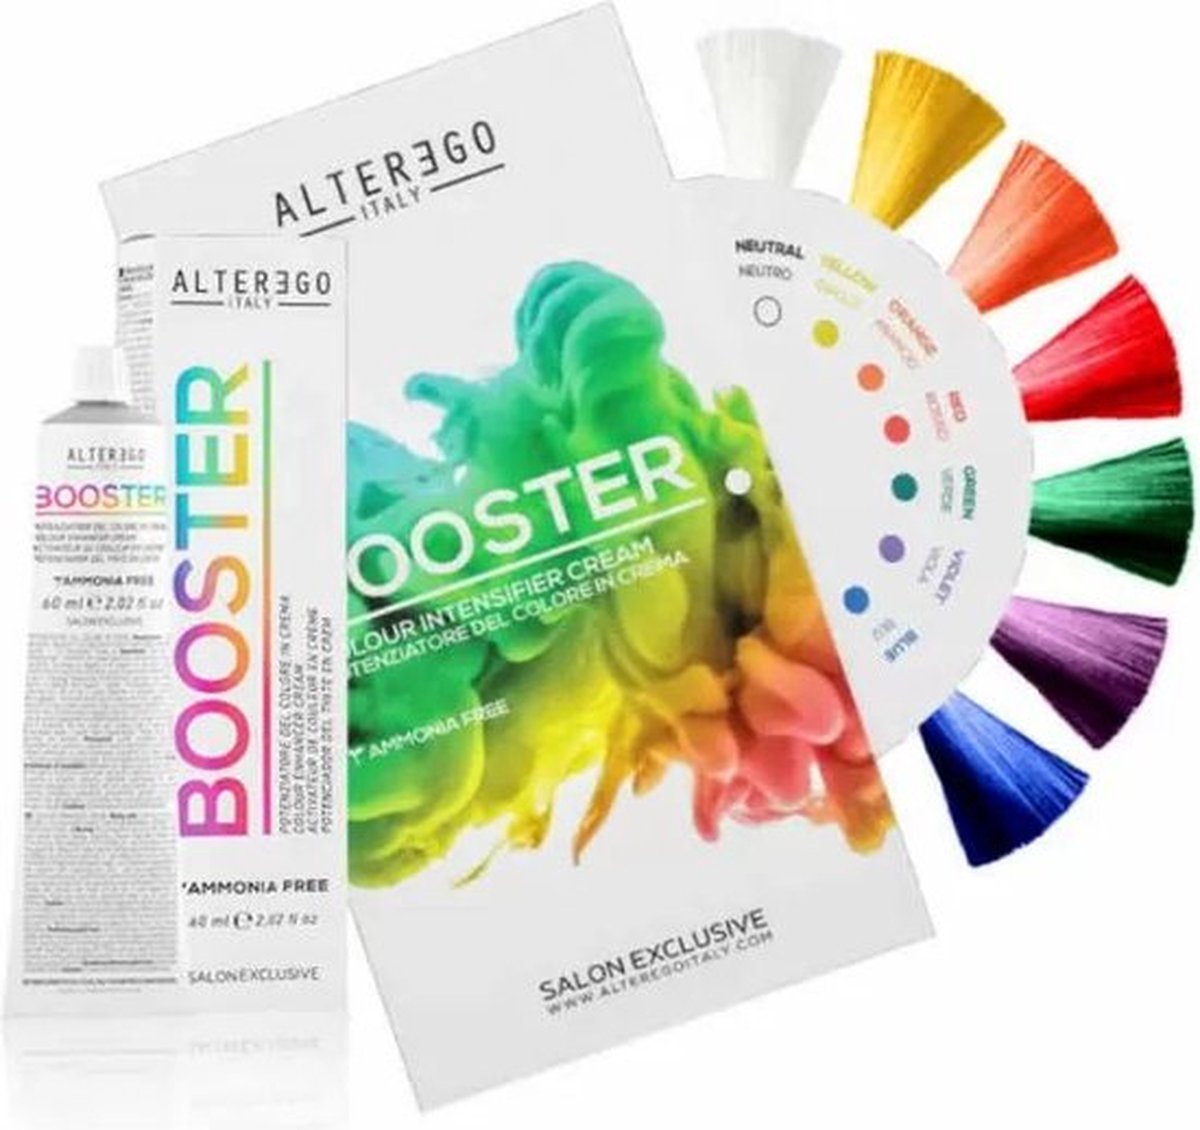 Altergo - Booster - Colour Intensifier Cream - Violet